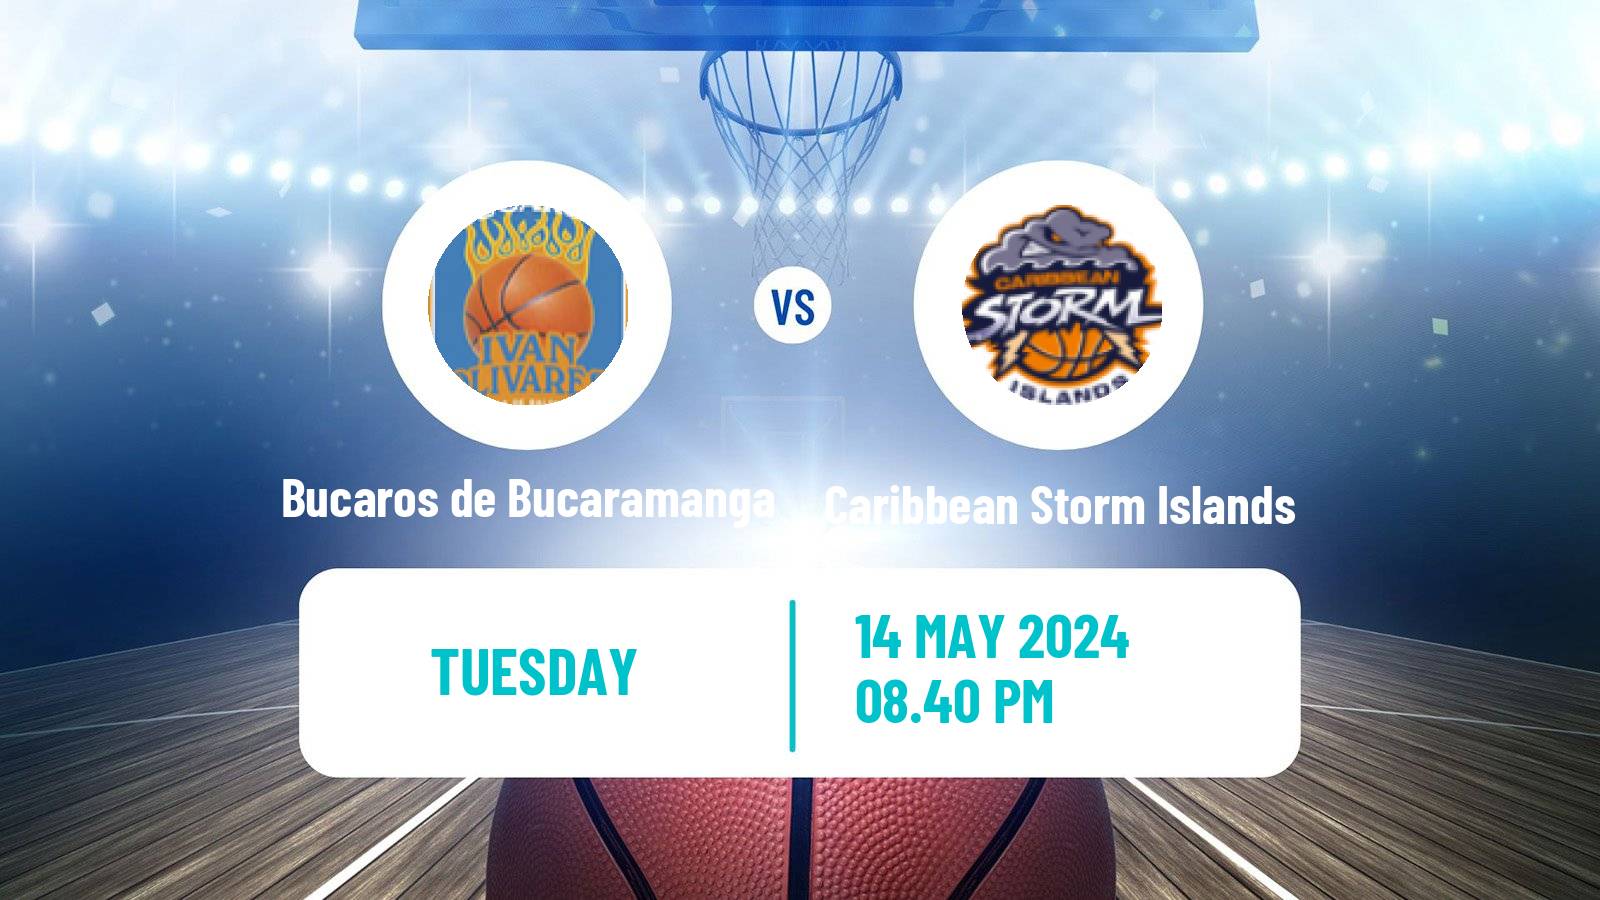 Basketball Colombian LBP Basketball Bucaros de Bucaramanga - Caribbean Storm Islands